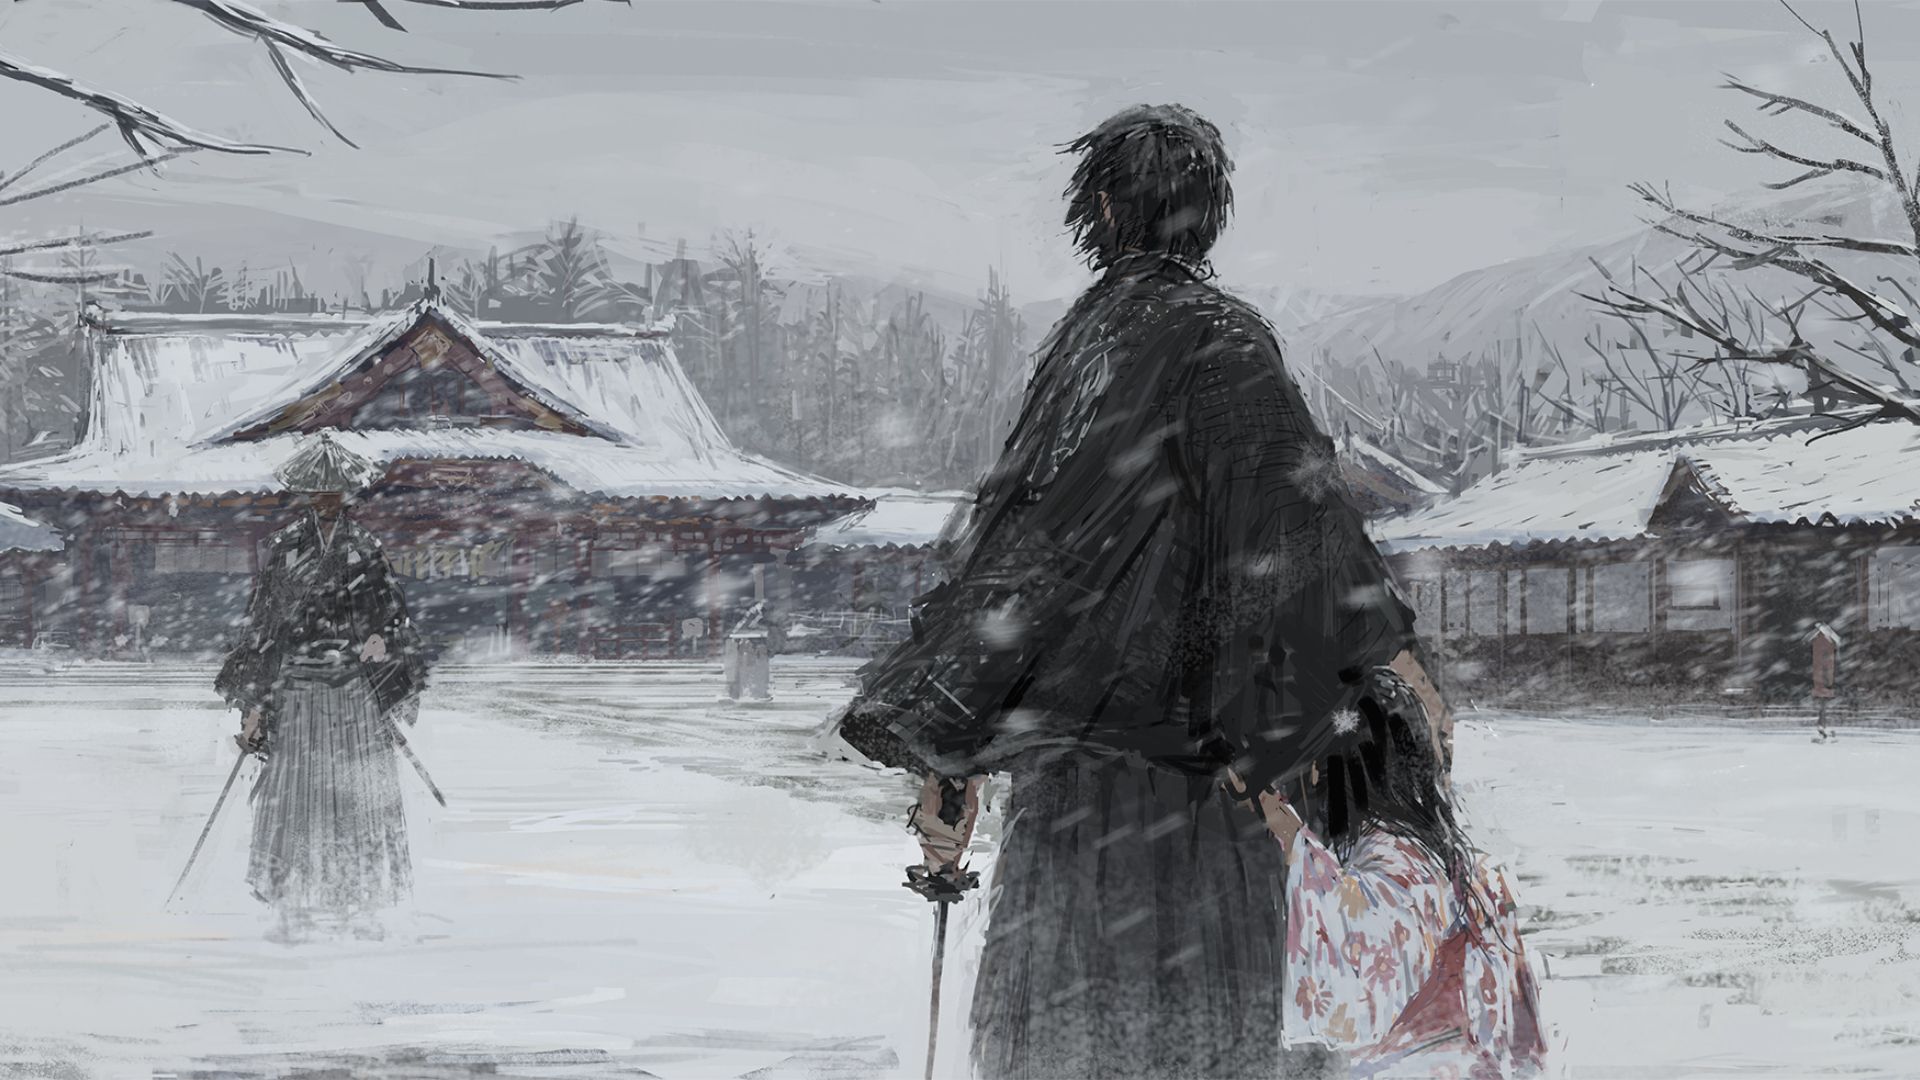 Samurai Warrior in Winter Illustration 1080P Laptop Full HD Wallpaper, HD Fantasy 4K Wallpaper, Image, Photo and Background